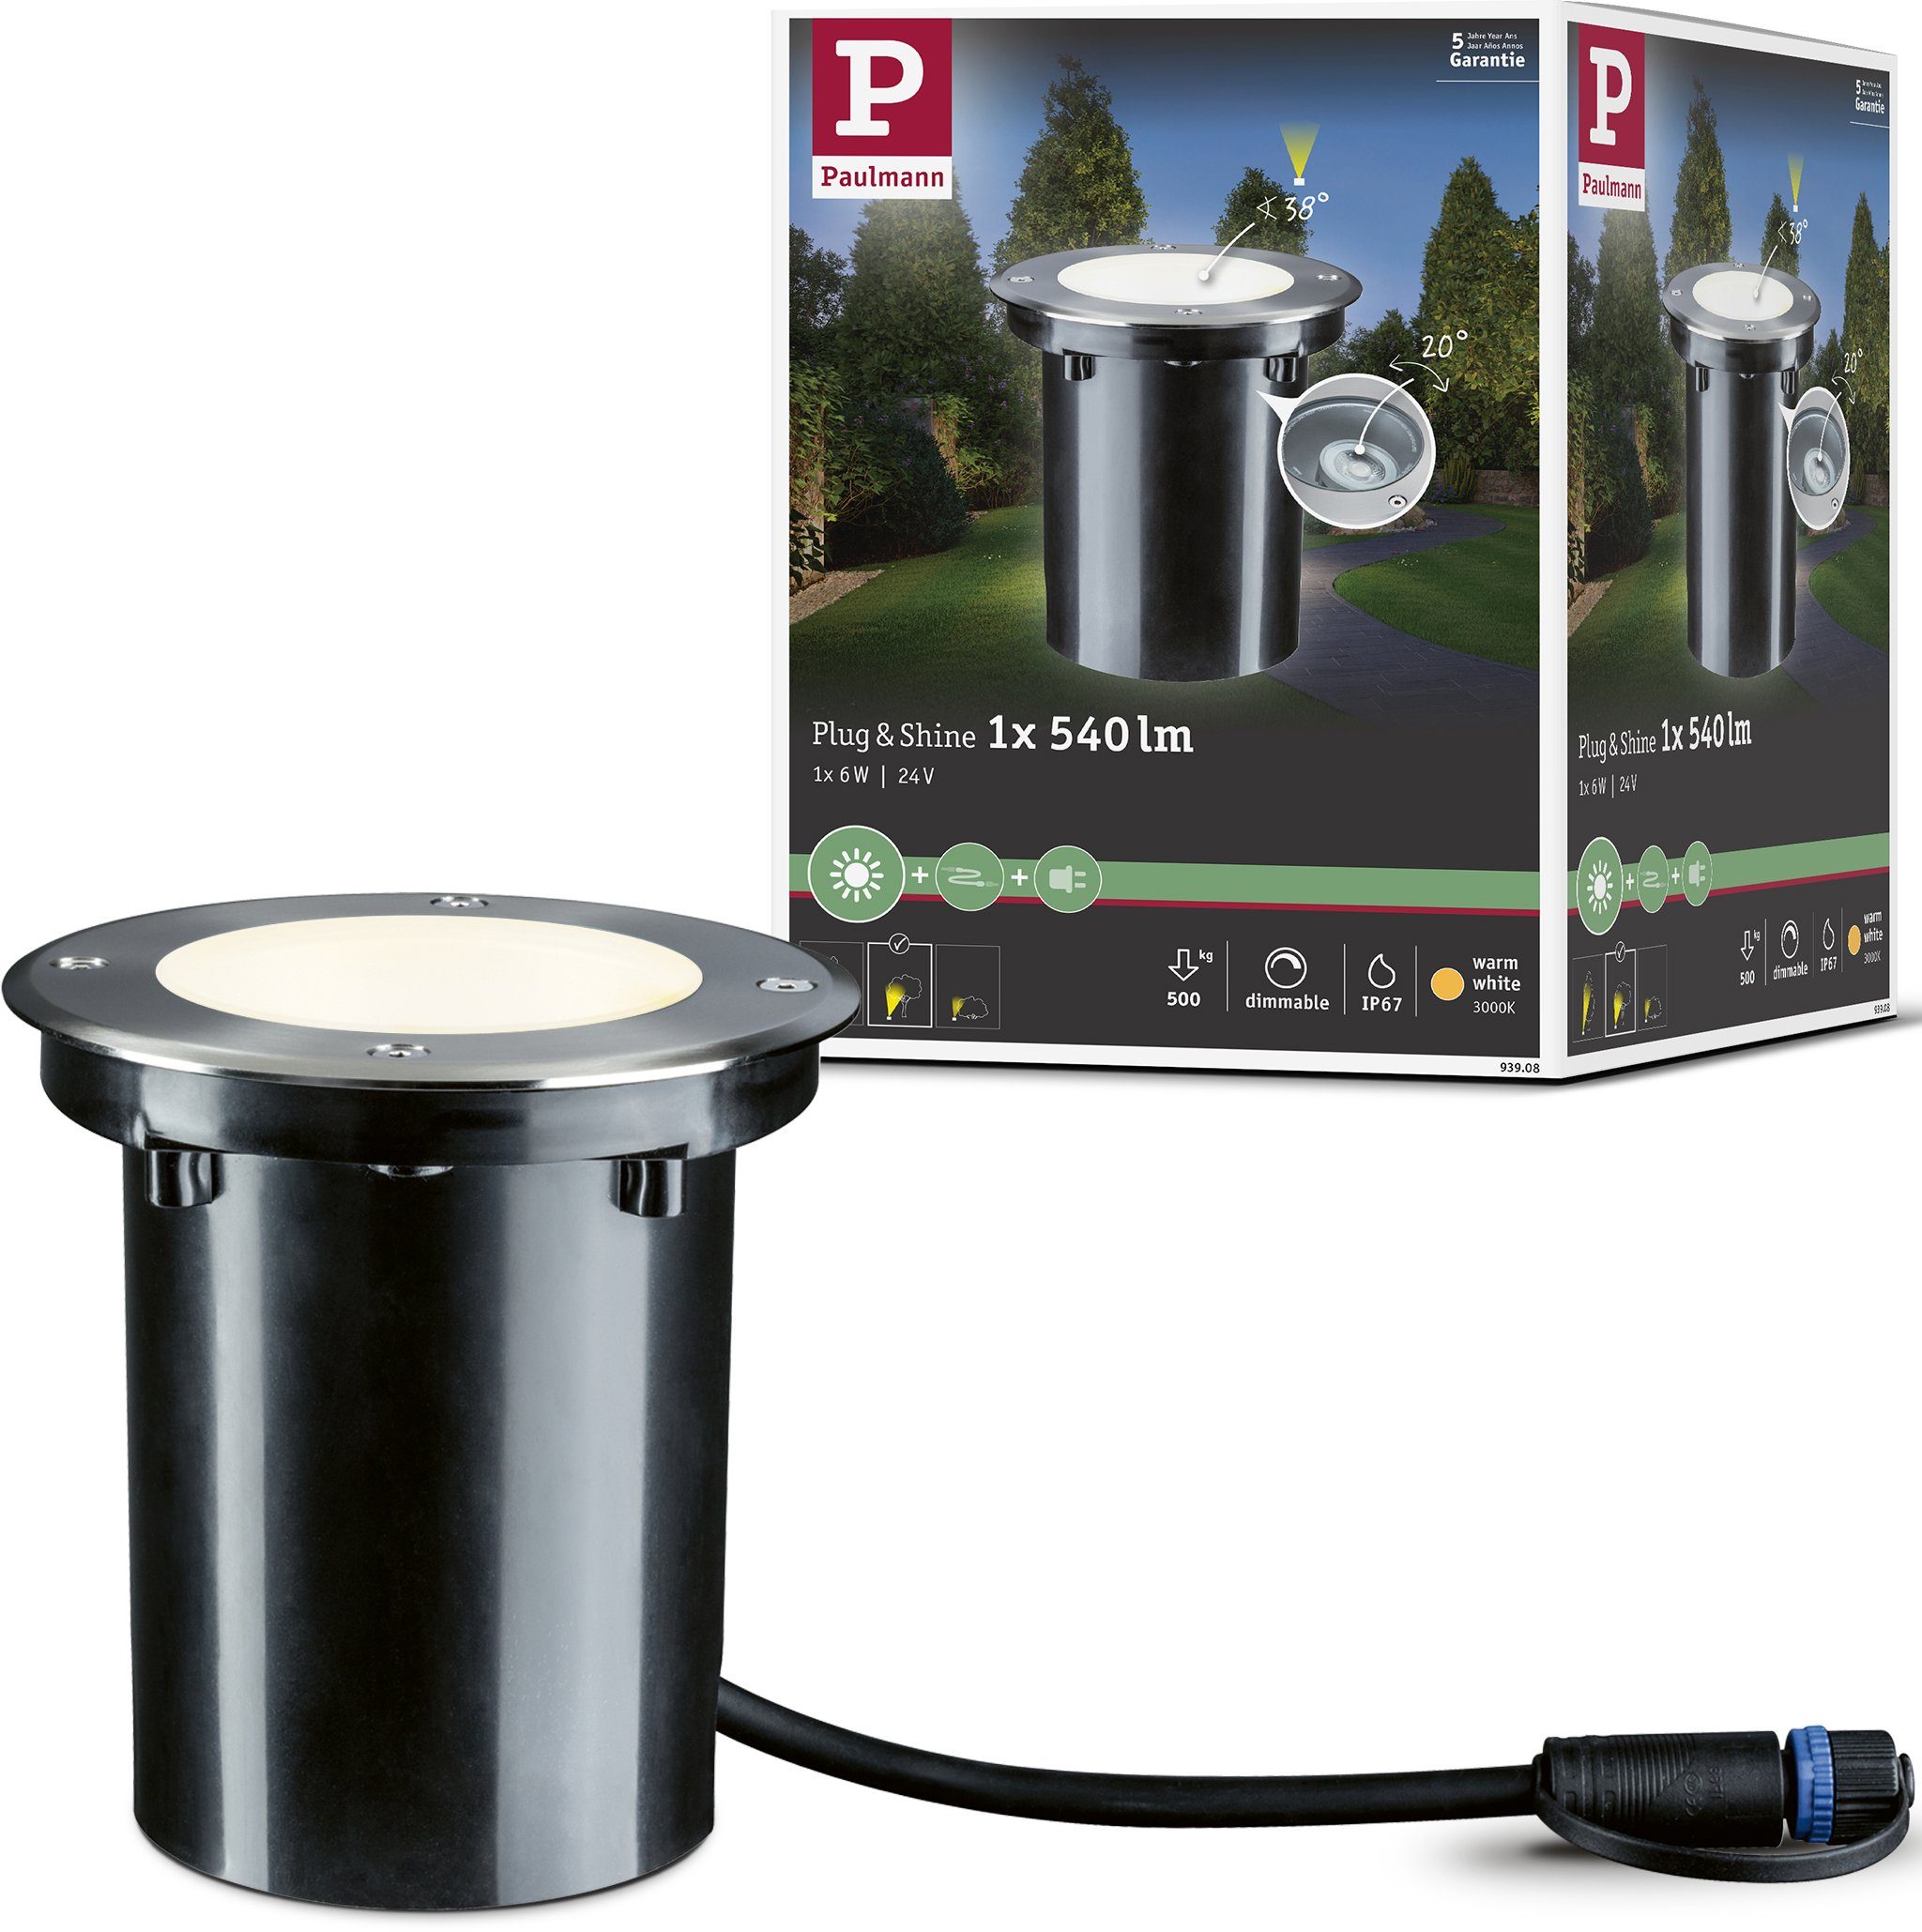 LED Paulmann 609lm LED & Plug IP67 fest & LED-Modul, Shine, Warmweiß, schwenkbar Einbauleuchte integriert, 3000K Shine, Plug